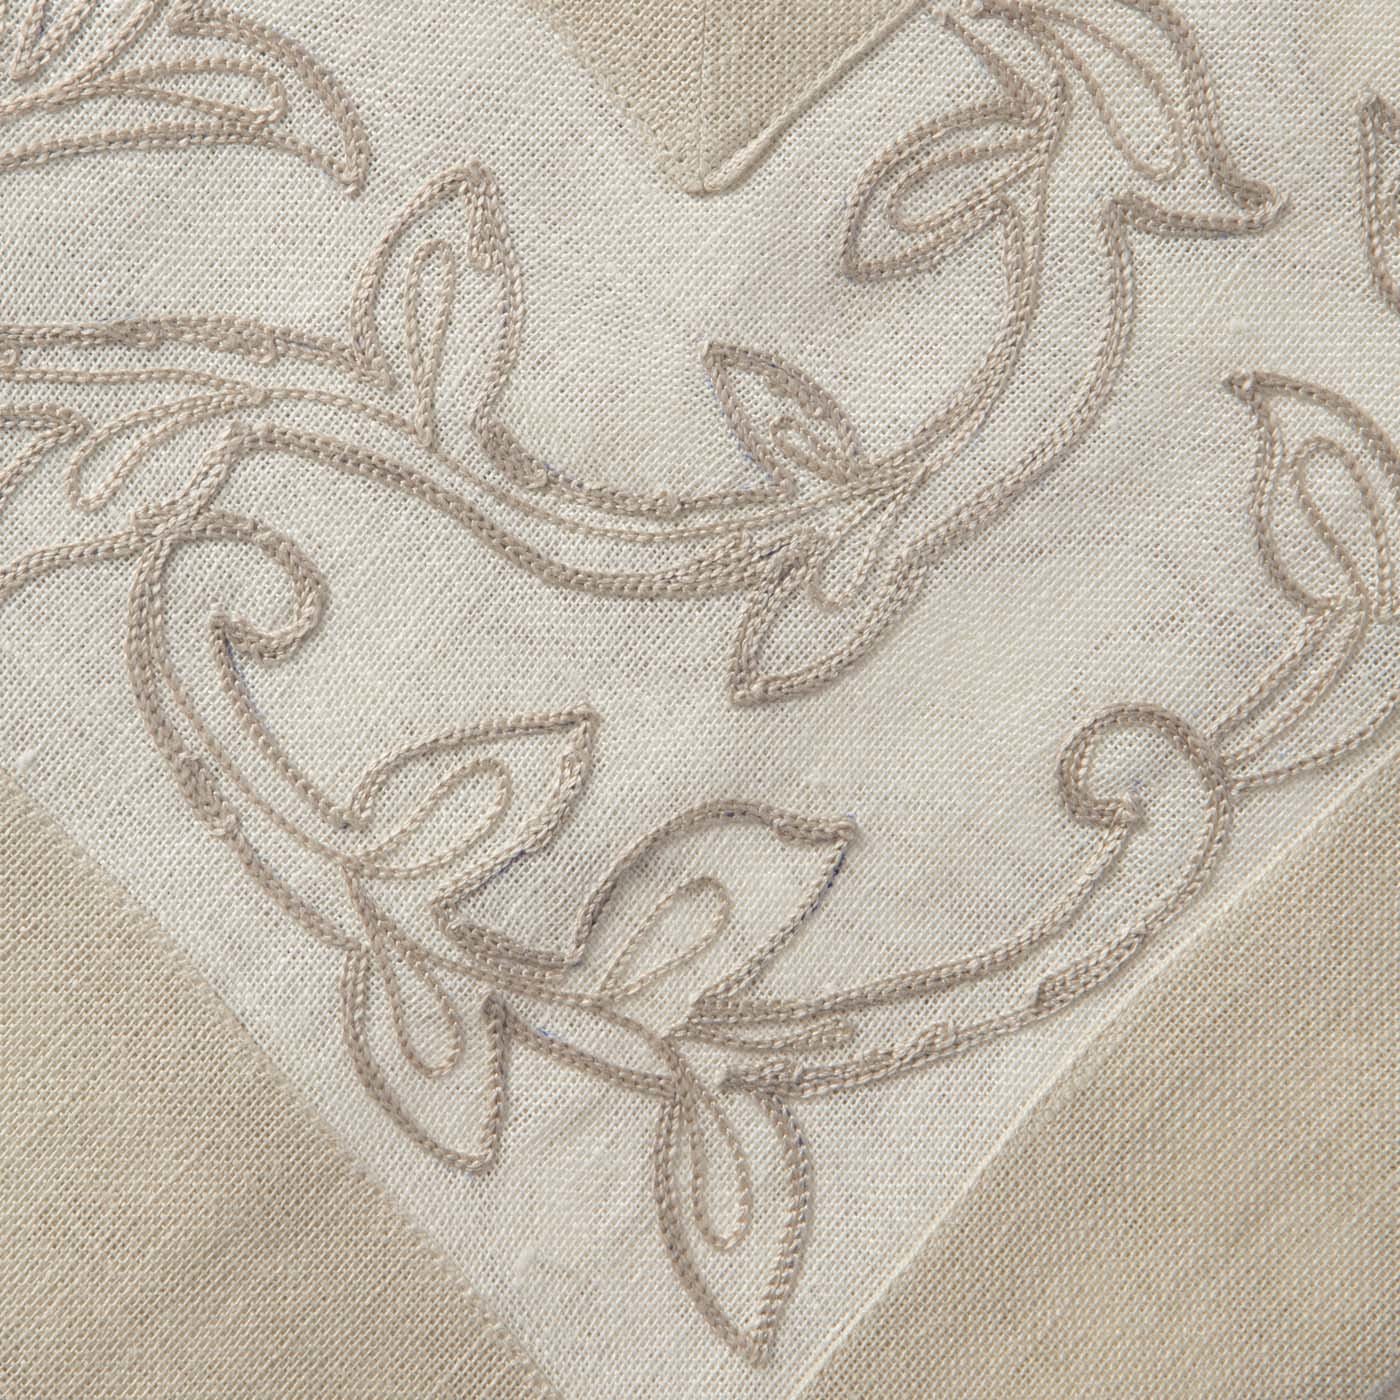 Vasari Linen Tablecloth - Alternative view 1